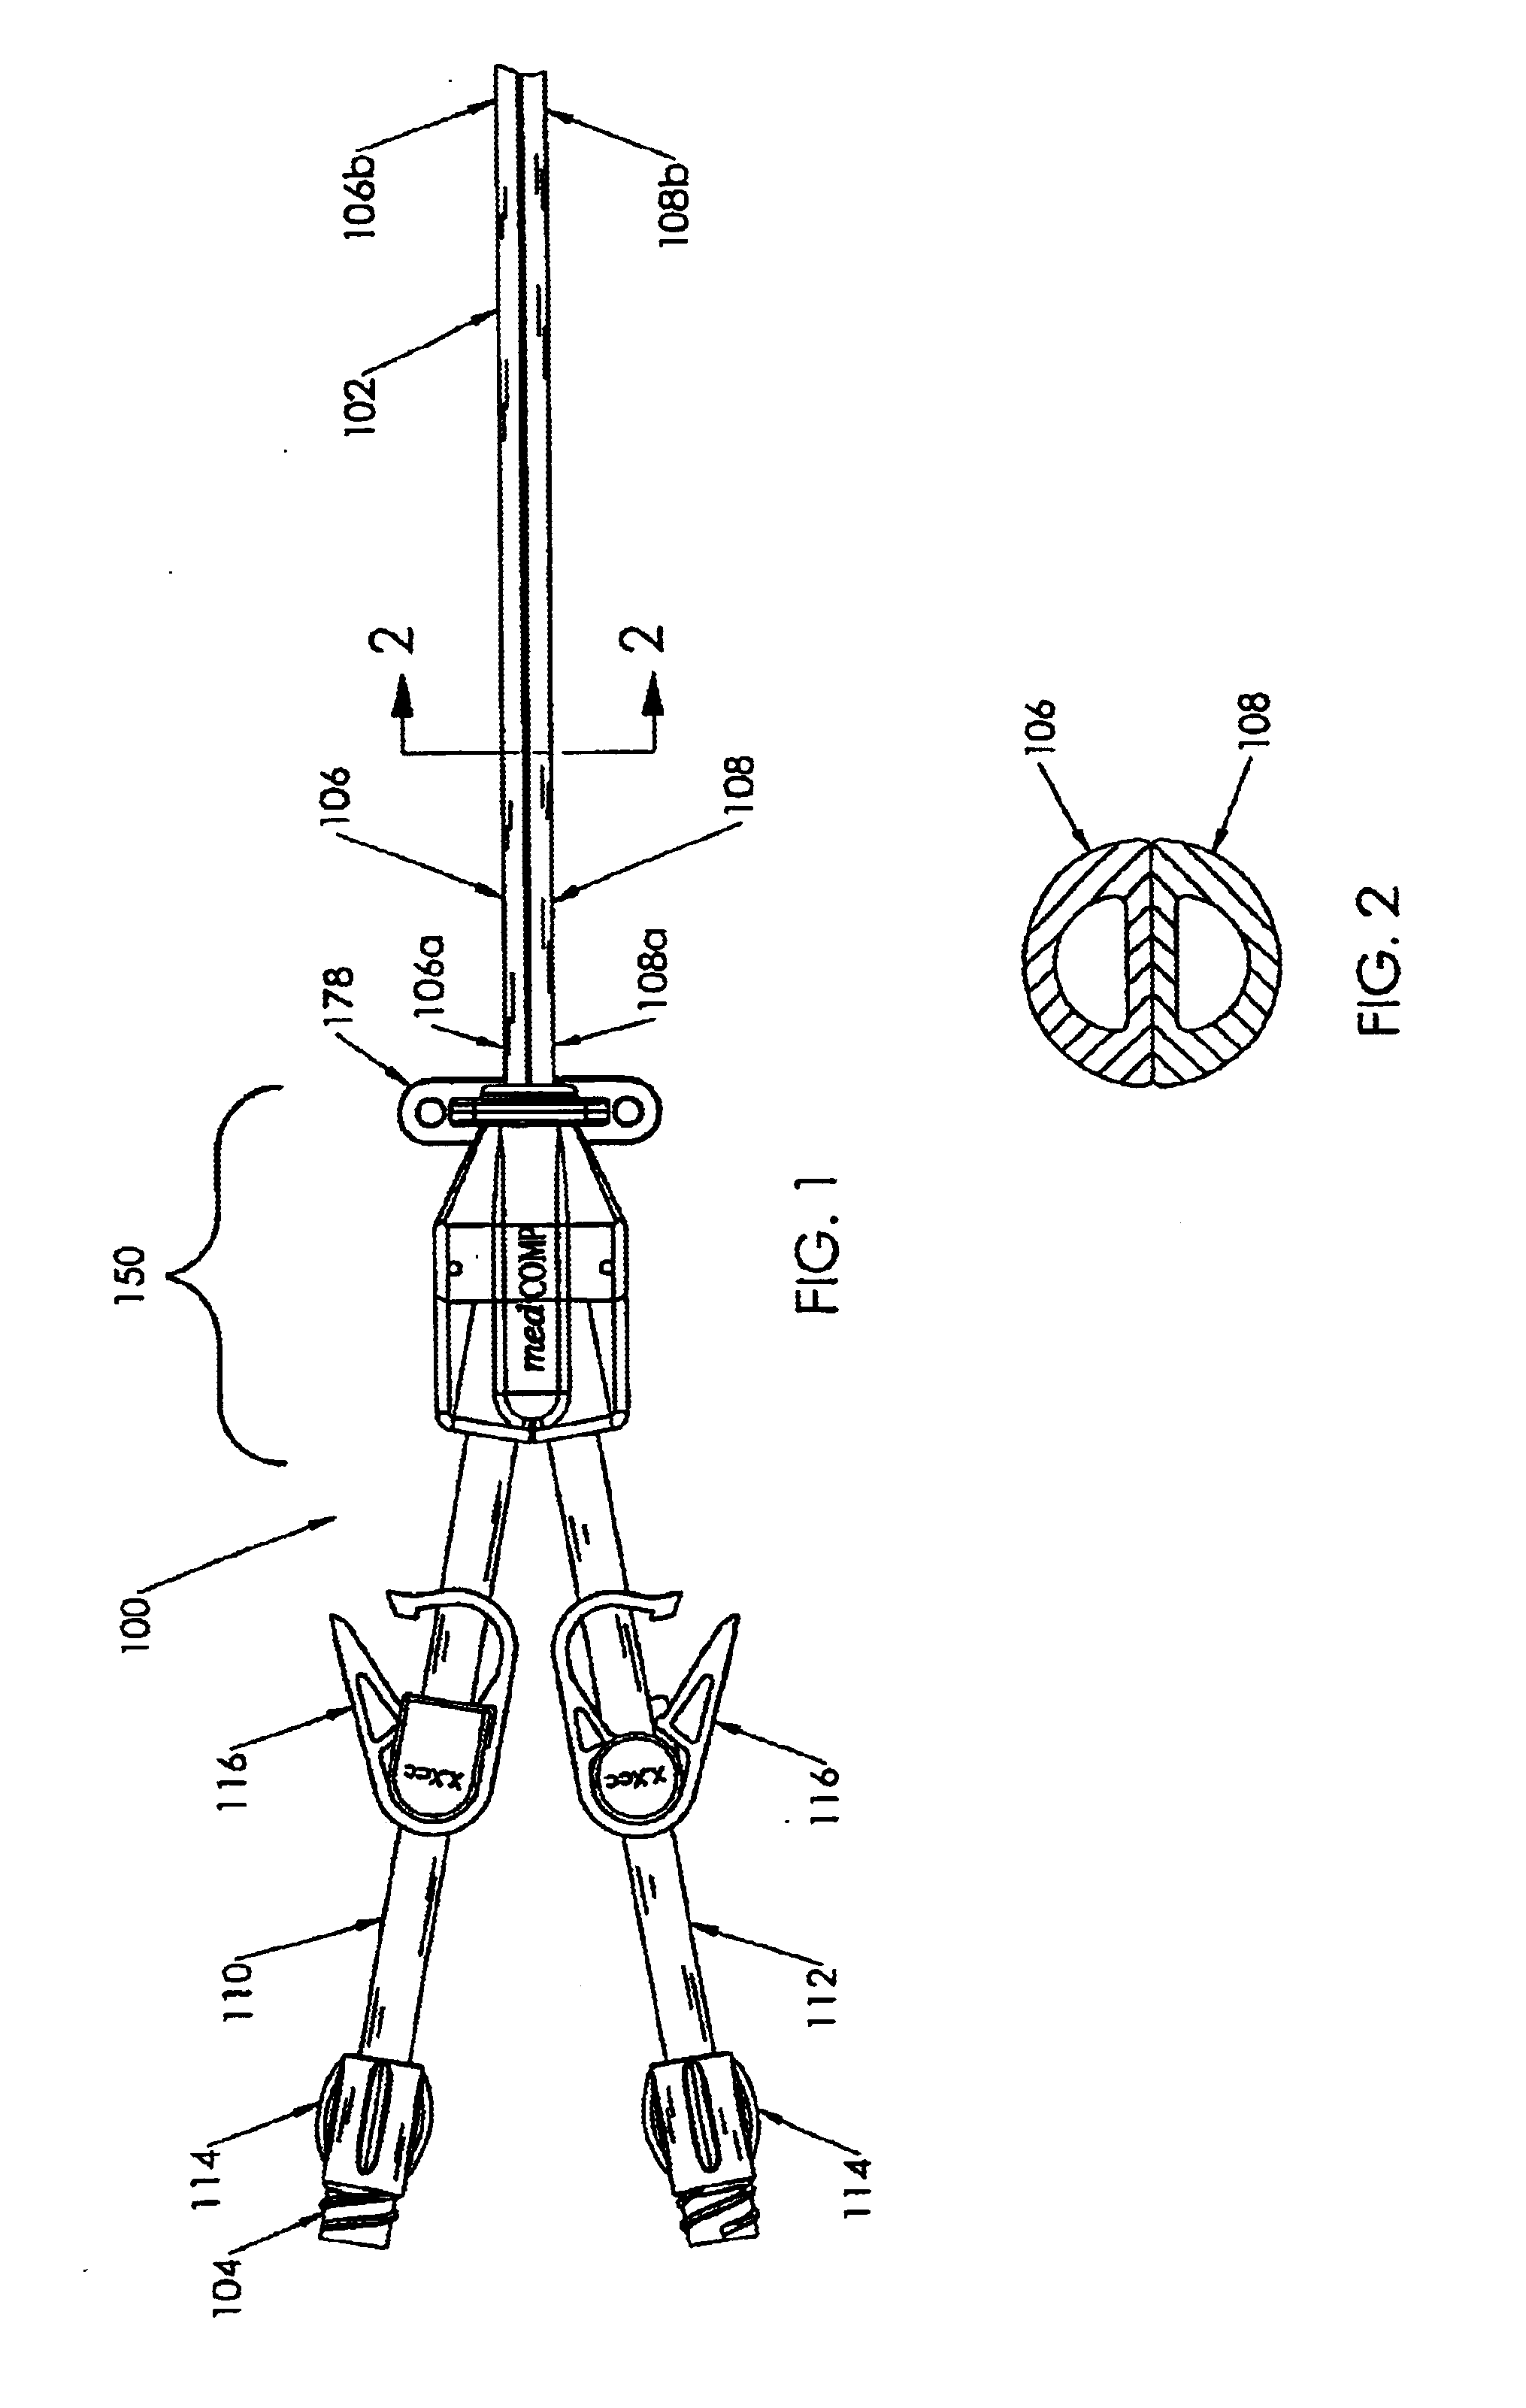 Multi-lumen catheter with detachable locking hub